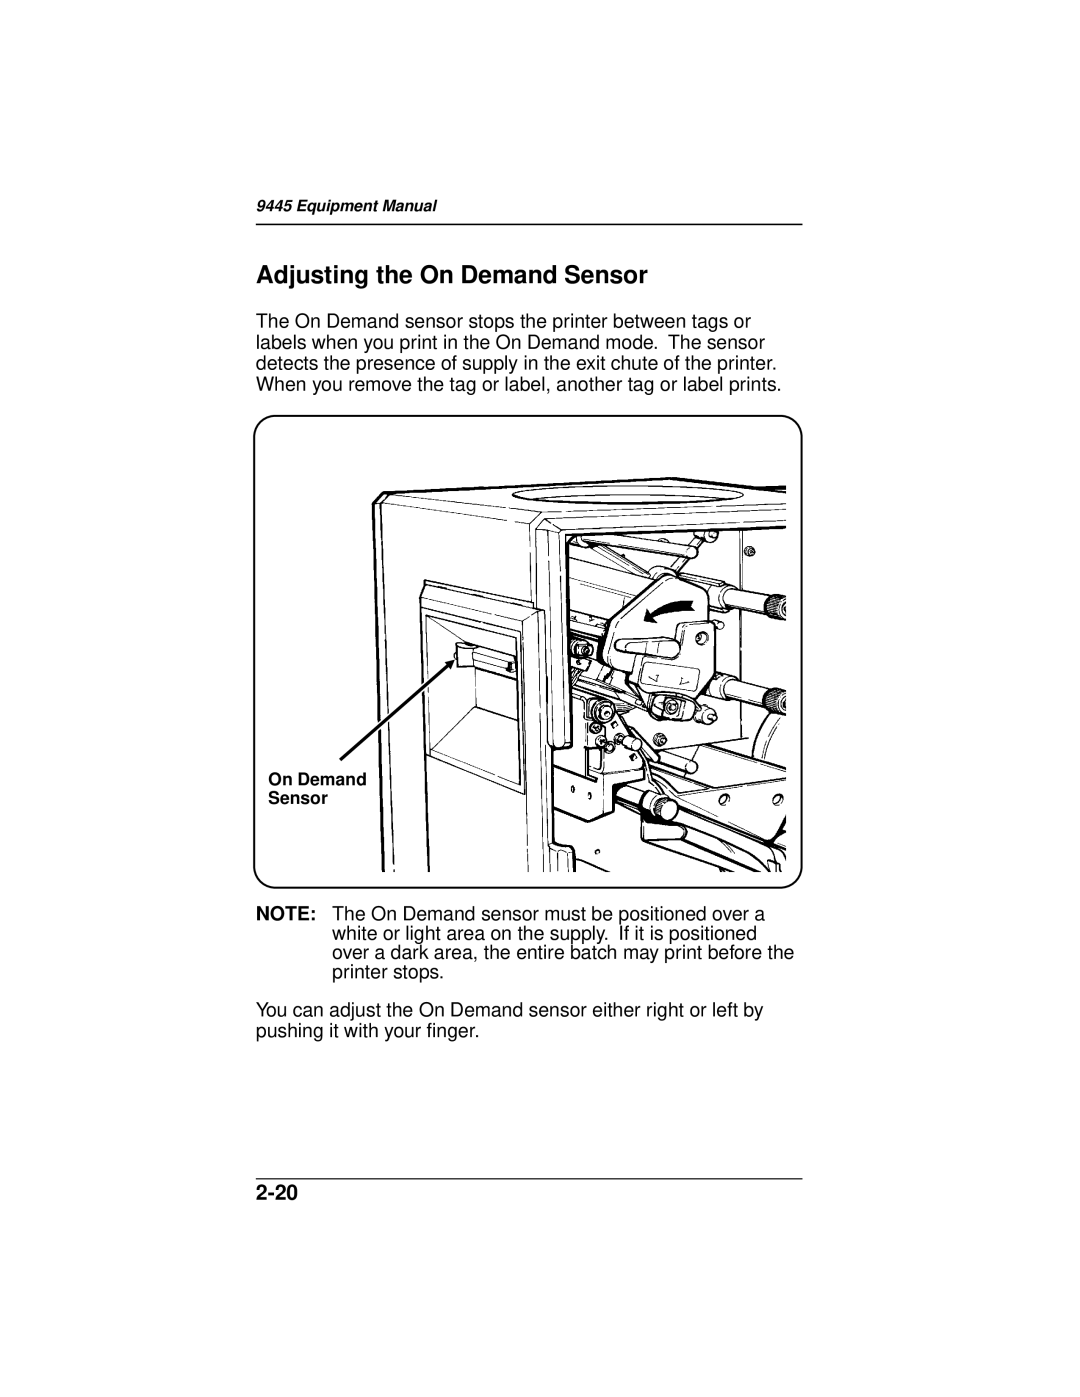 Paxar 9445 manual Adjusting the On Demand Sensor, 2-20 